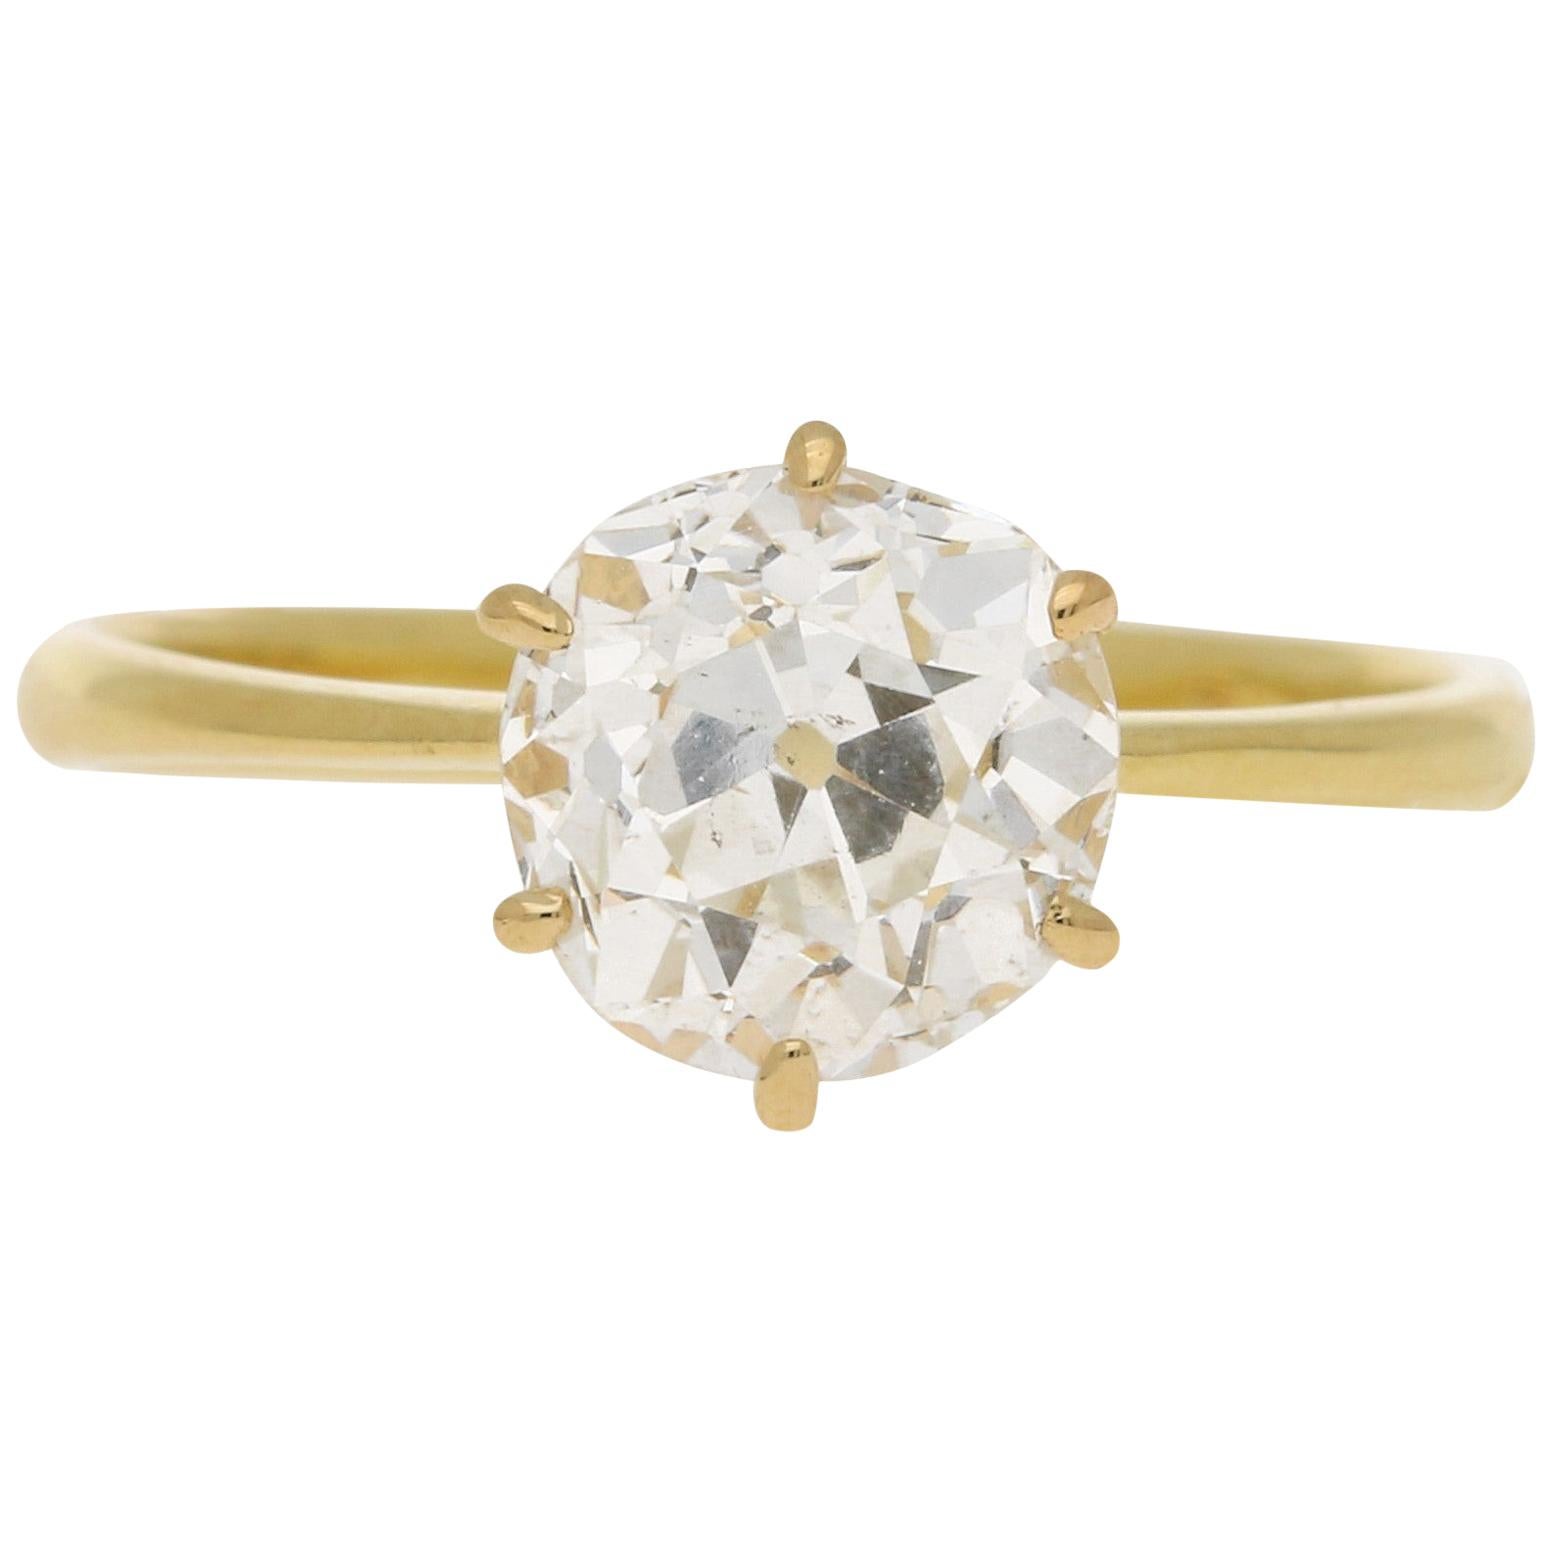 Old Mine Cut Diamond Engagement Ring Set in 18 Karat Yellow Gold